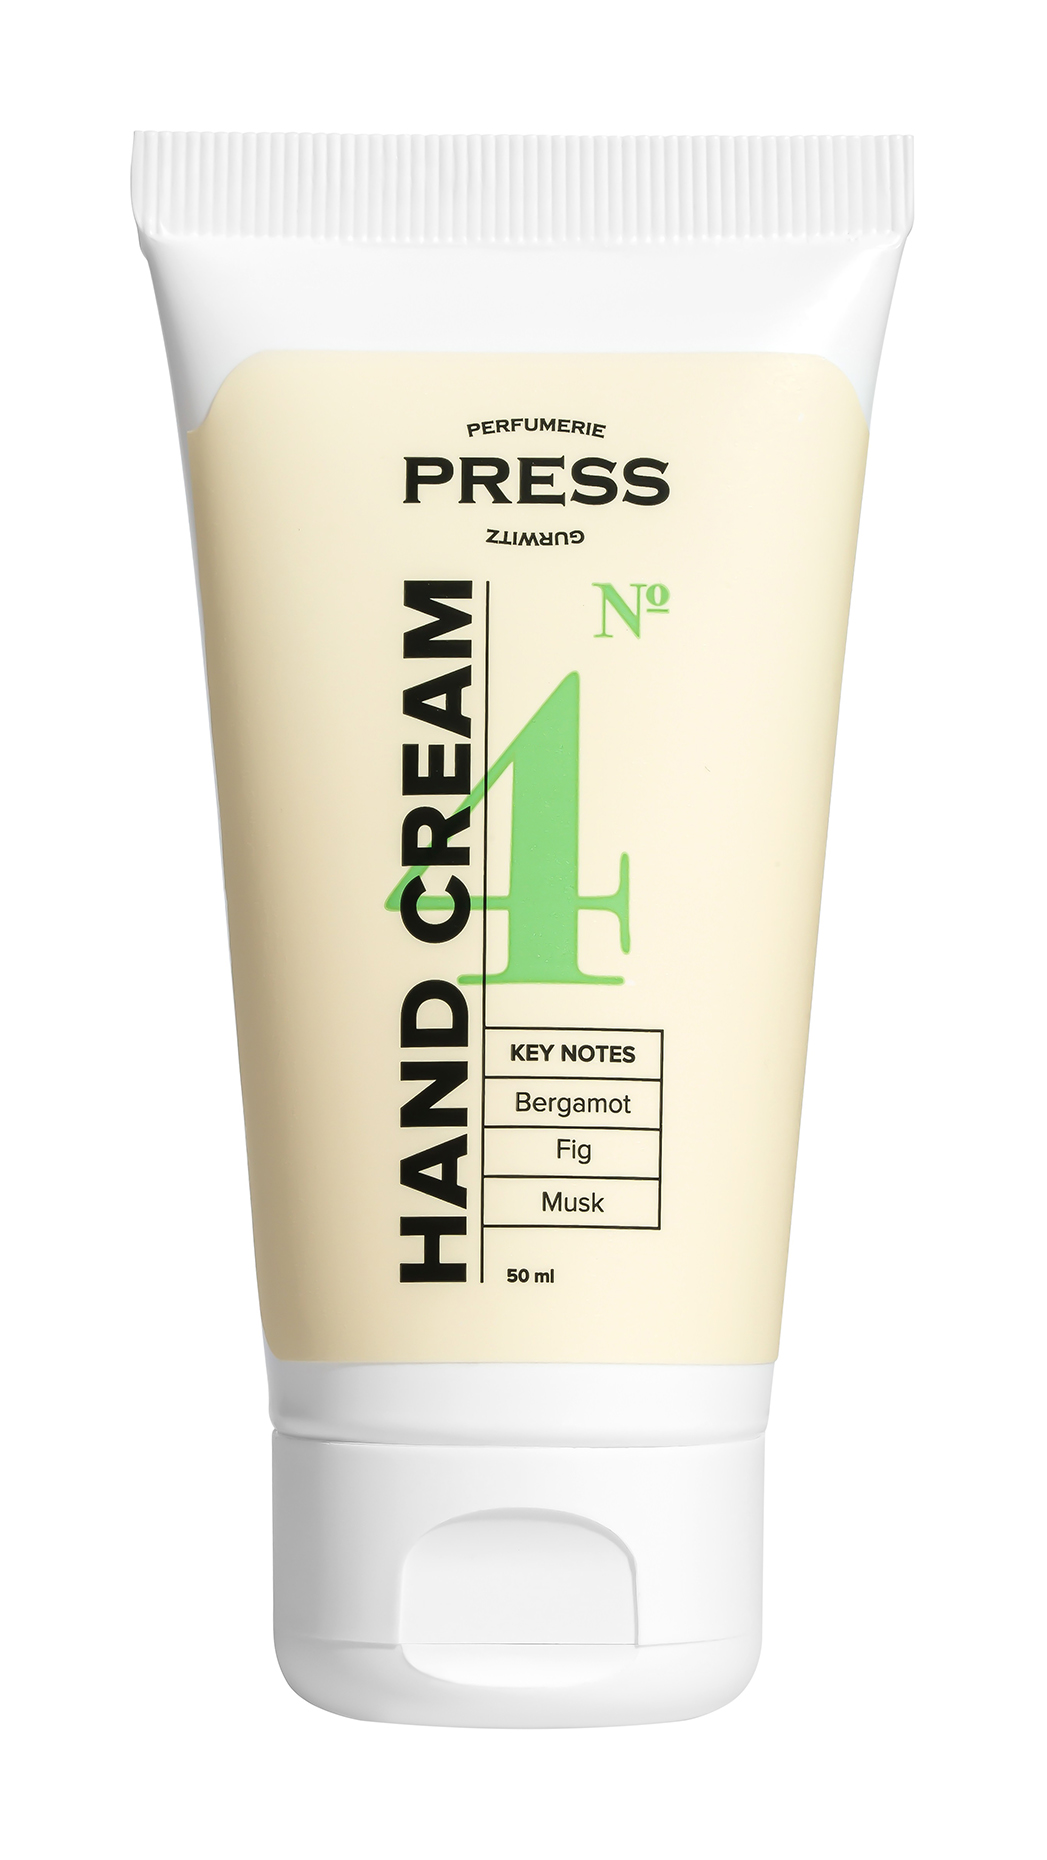 фото Парфюмированный увлажняющий крем для рук, press gurwitz hand cream № 4, 50мл press gurwitz perfumerie